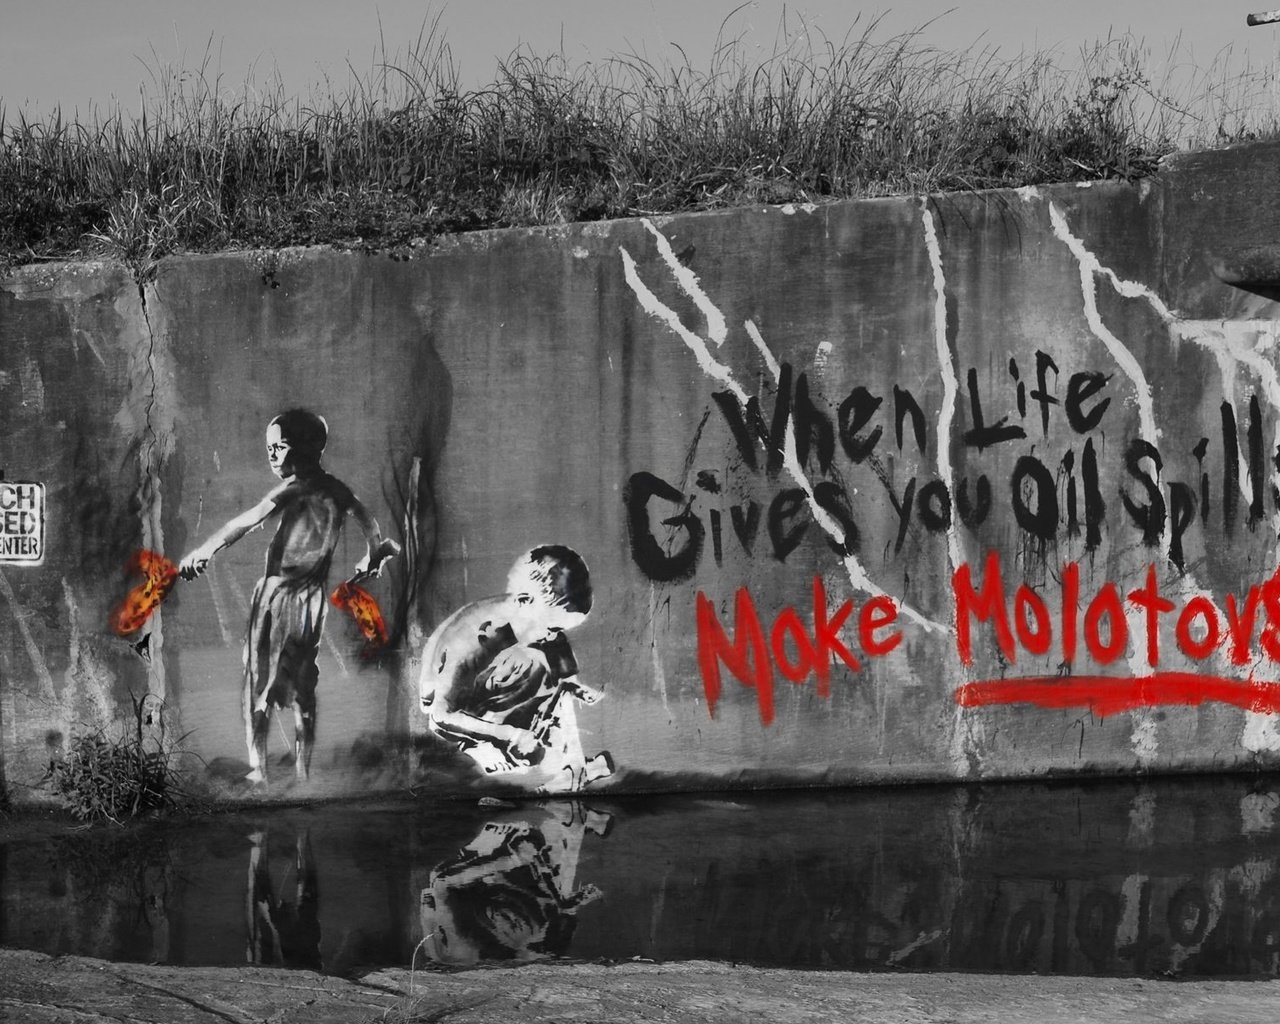 Обои рисунок, when life gives you oil spills make molotovs, надпись, стена, дети, граффити, трафарет, стенсил, коктейль молотова, figure, the inscription, wall, children, graffiti, stencil, stensil, a molotov cocktail разрешение 1920x1200 Загрузить